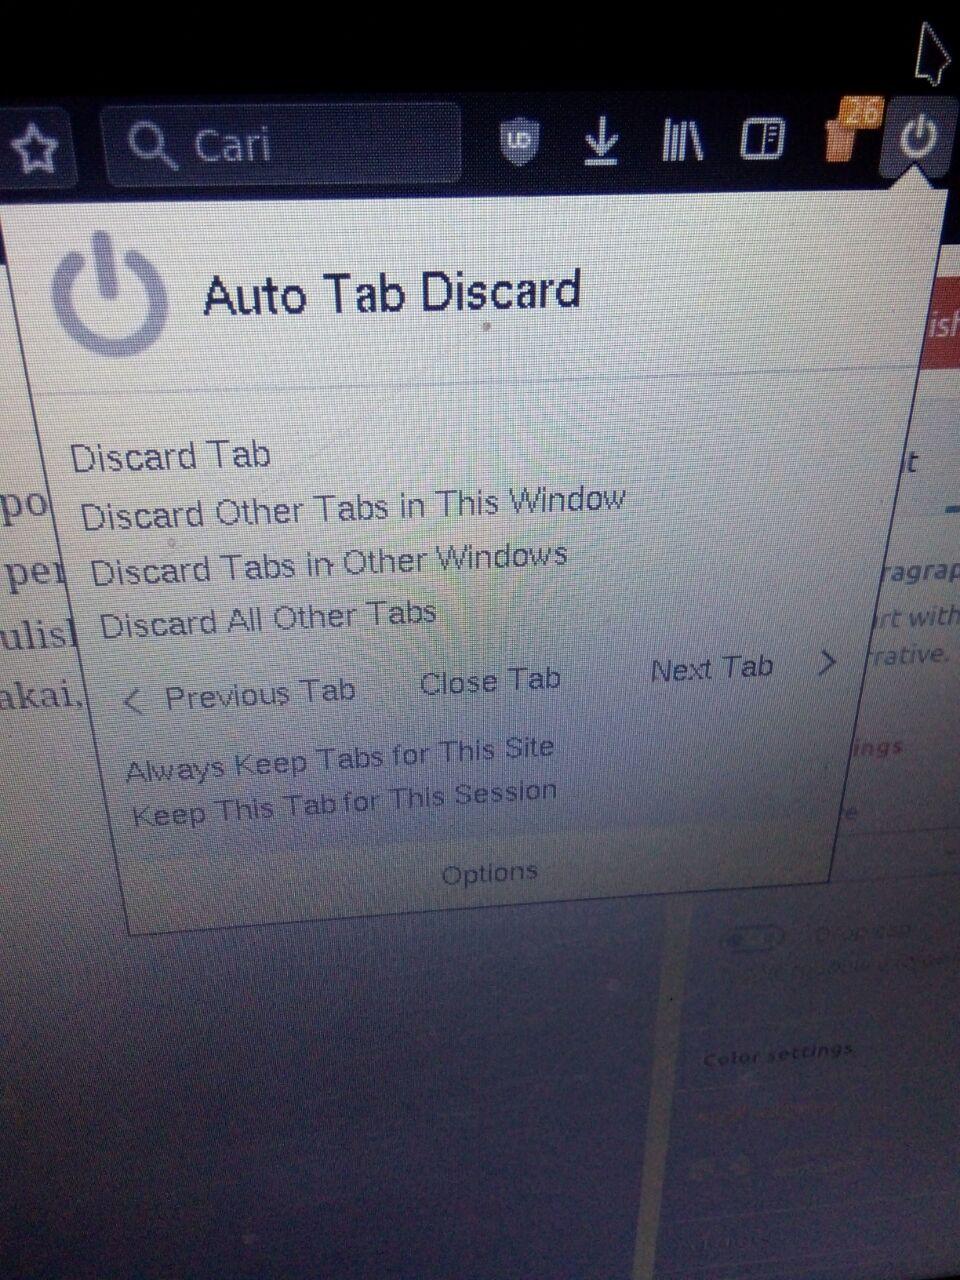 Auto Tab Discard